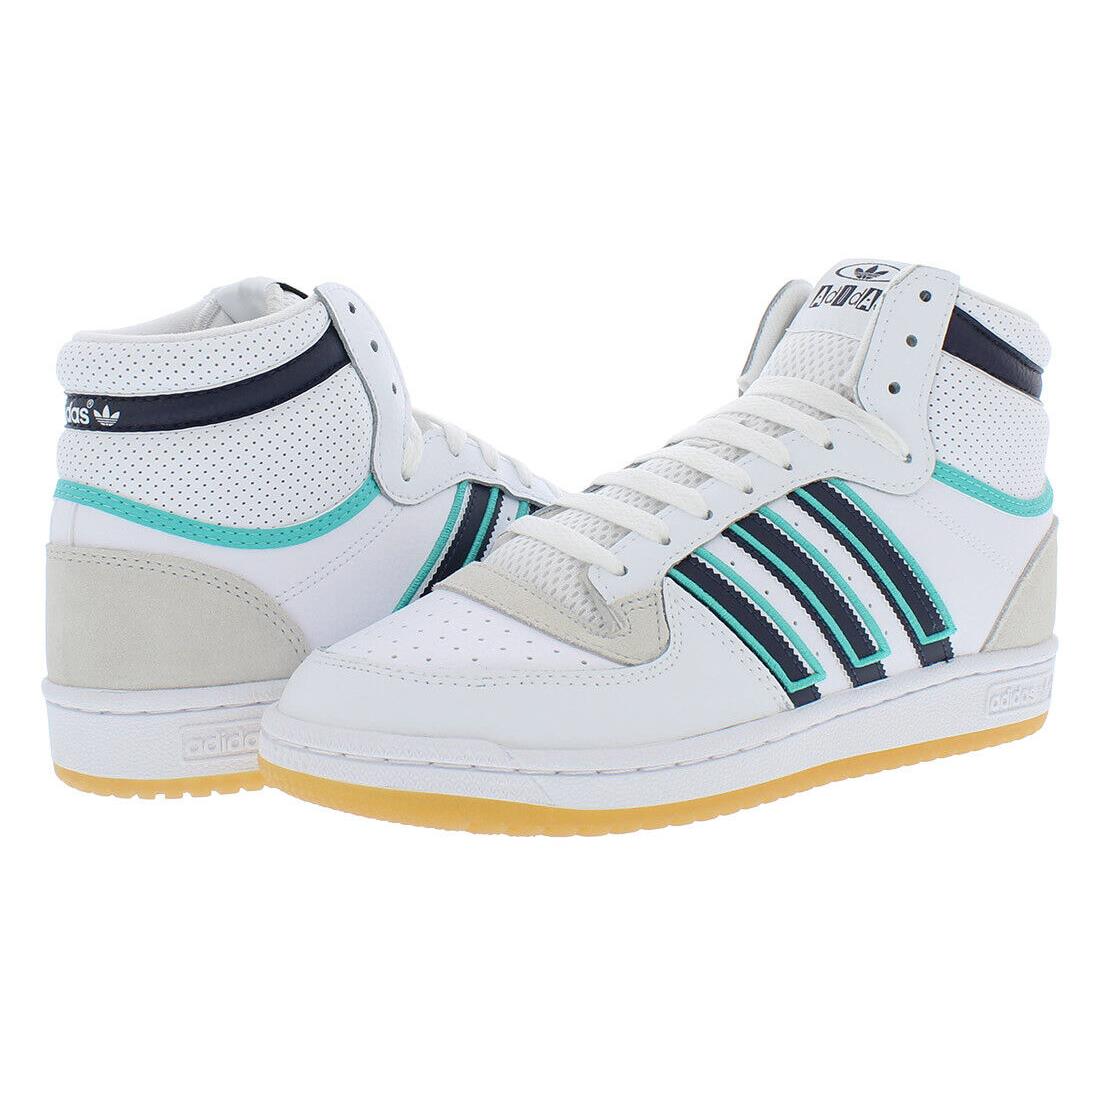 Adidas Top Ten Rb Mens Shoes - White/Navy, Main: White